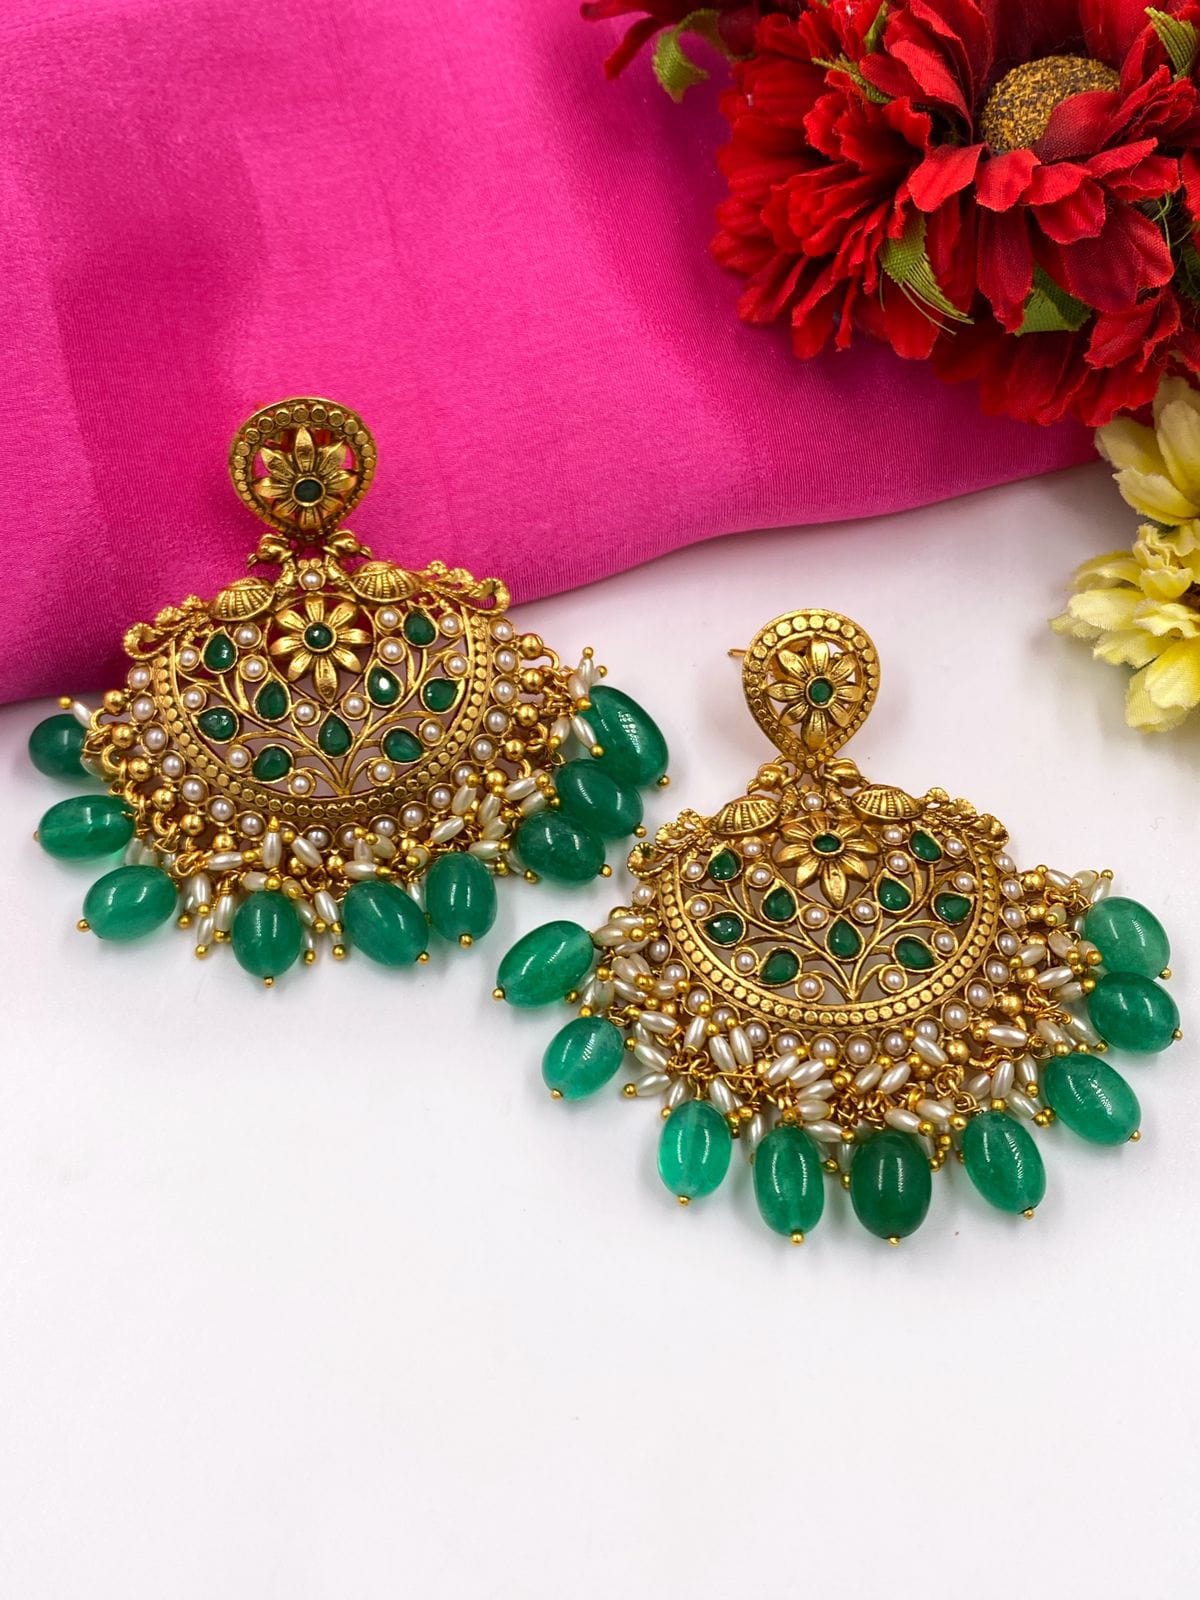 Chandbali Earring-627 A2, Online Store Items - R-Chie Creations, Mumbai |  ID: 2851562059497